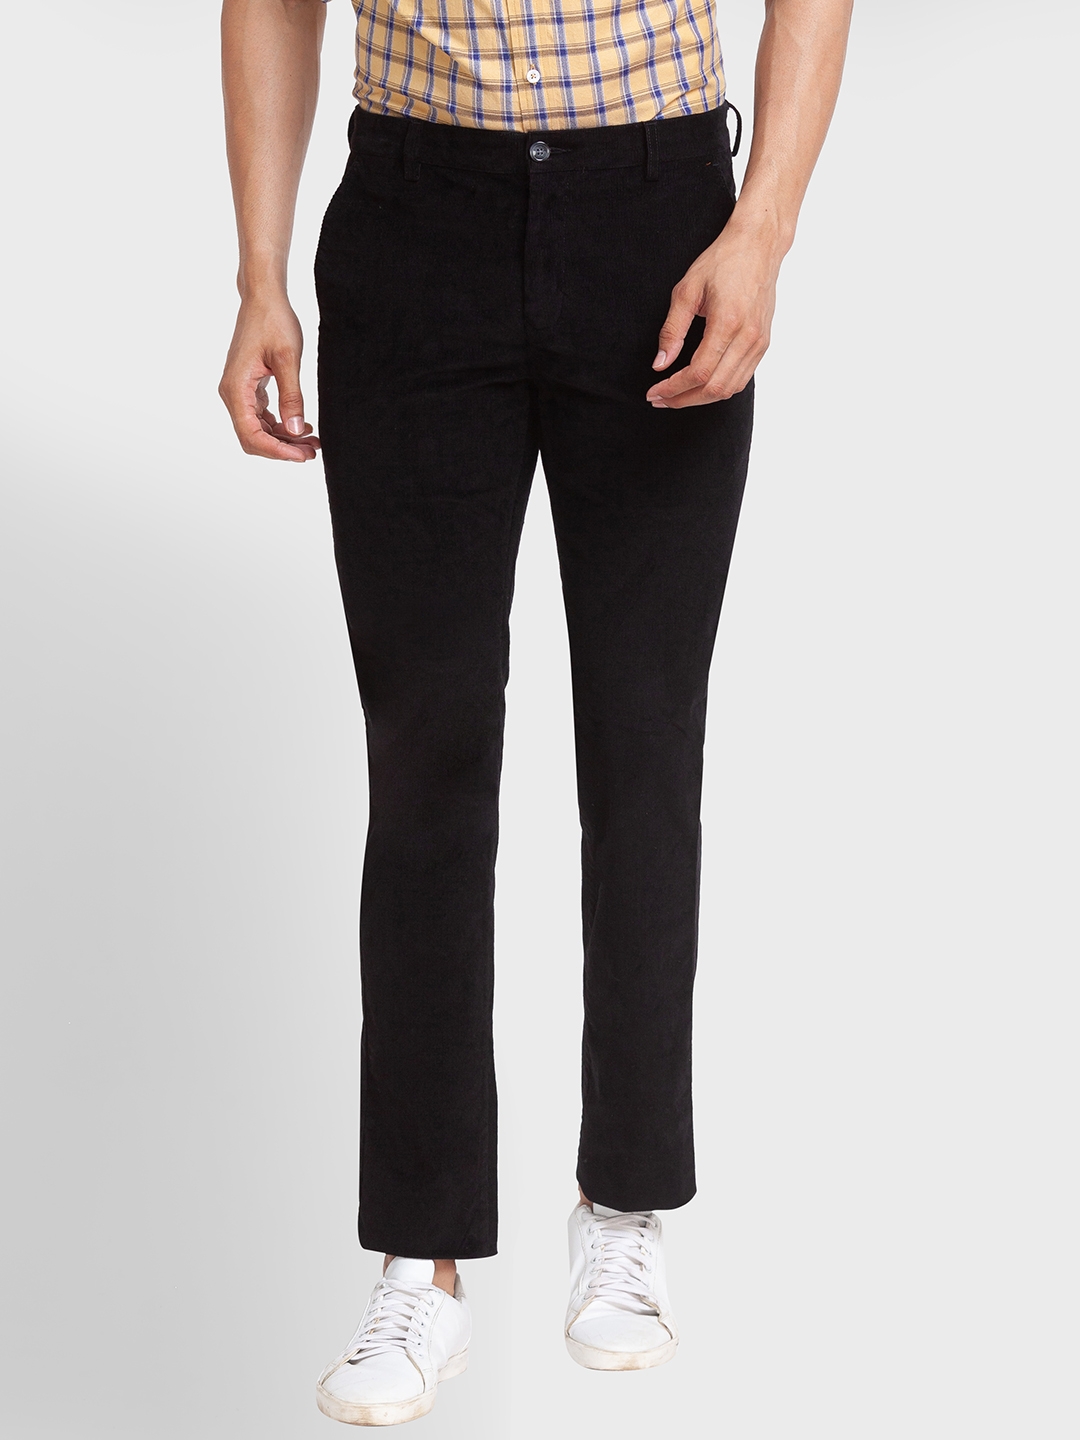 Colorplus Contemporary Black Trouser For Men